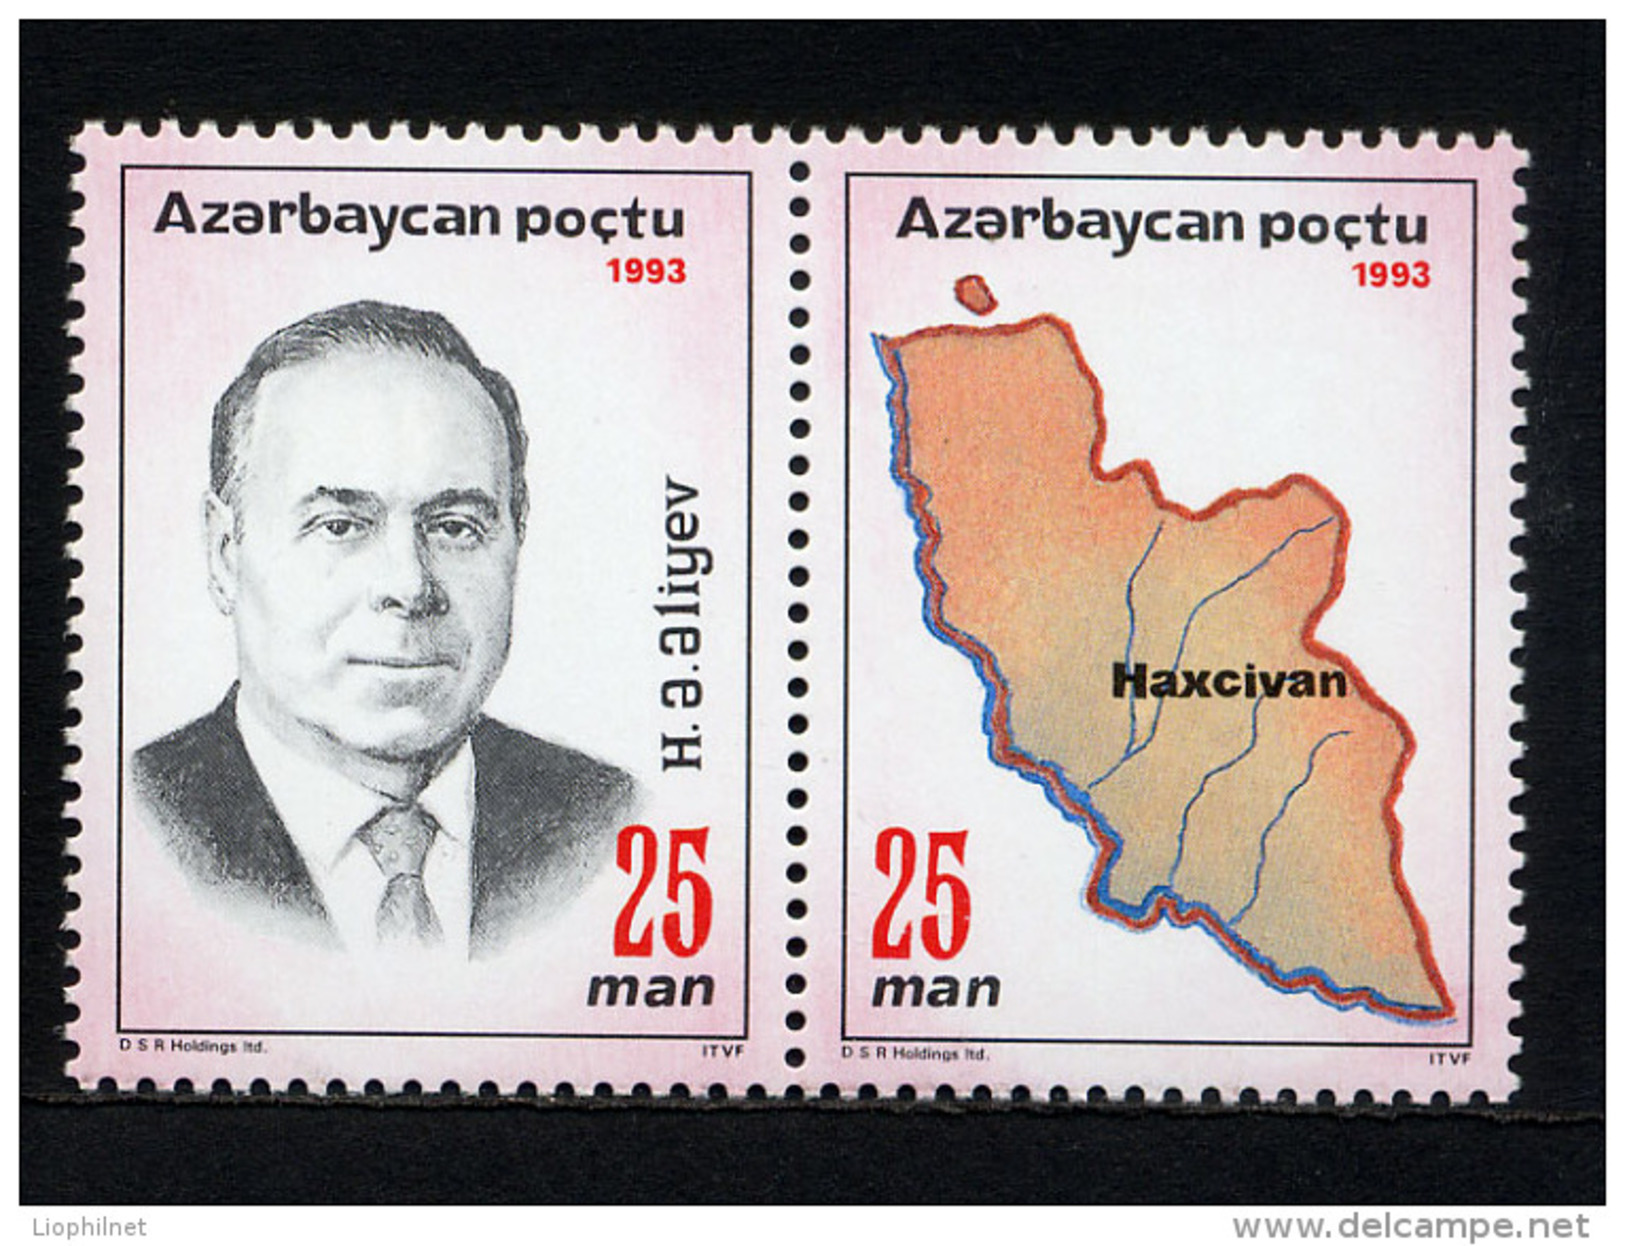 AZERBAIDJAN AZERBAIJAN 1993, ALEIEV AVEC ERREUR HAXCIVAN,  2 Valeurs, Neufs / Mint. R275 - Azerbaïdjan